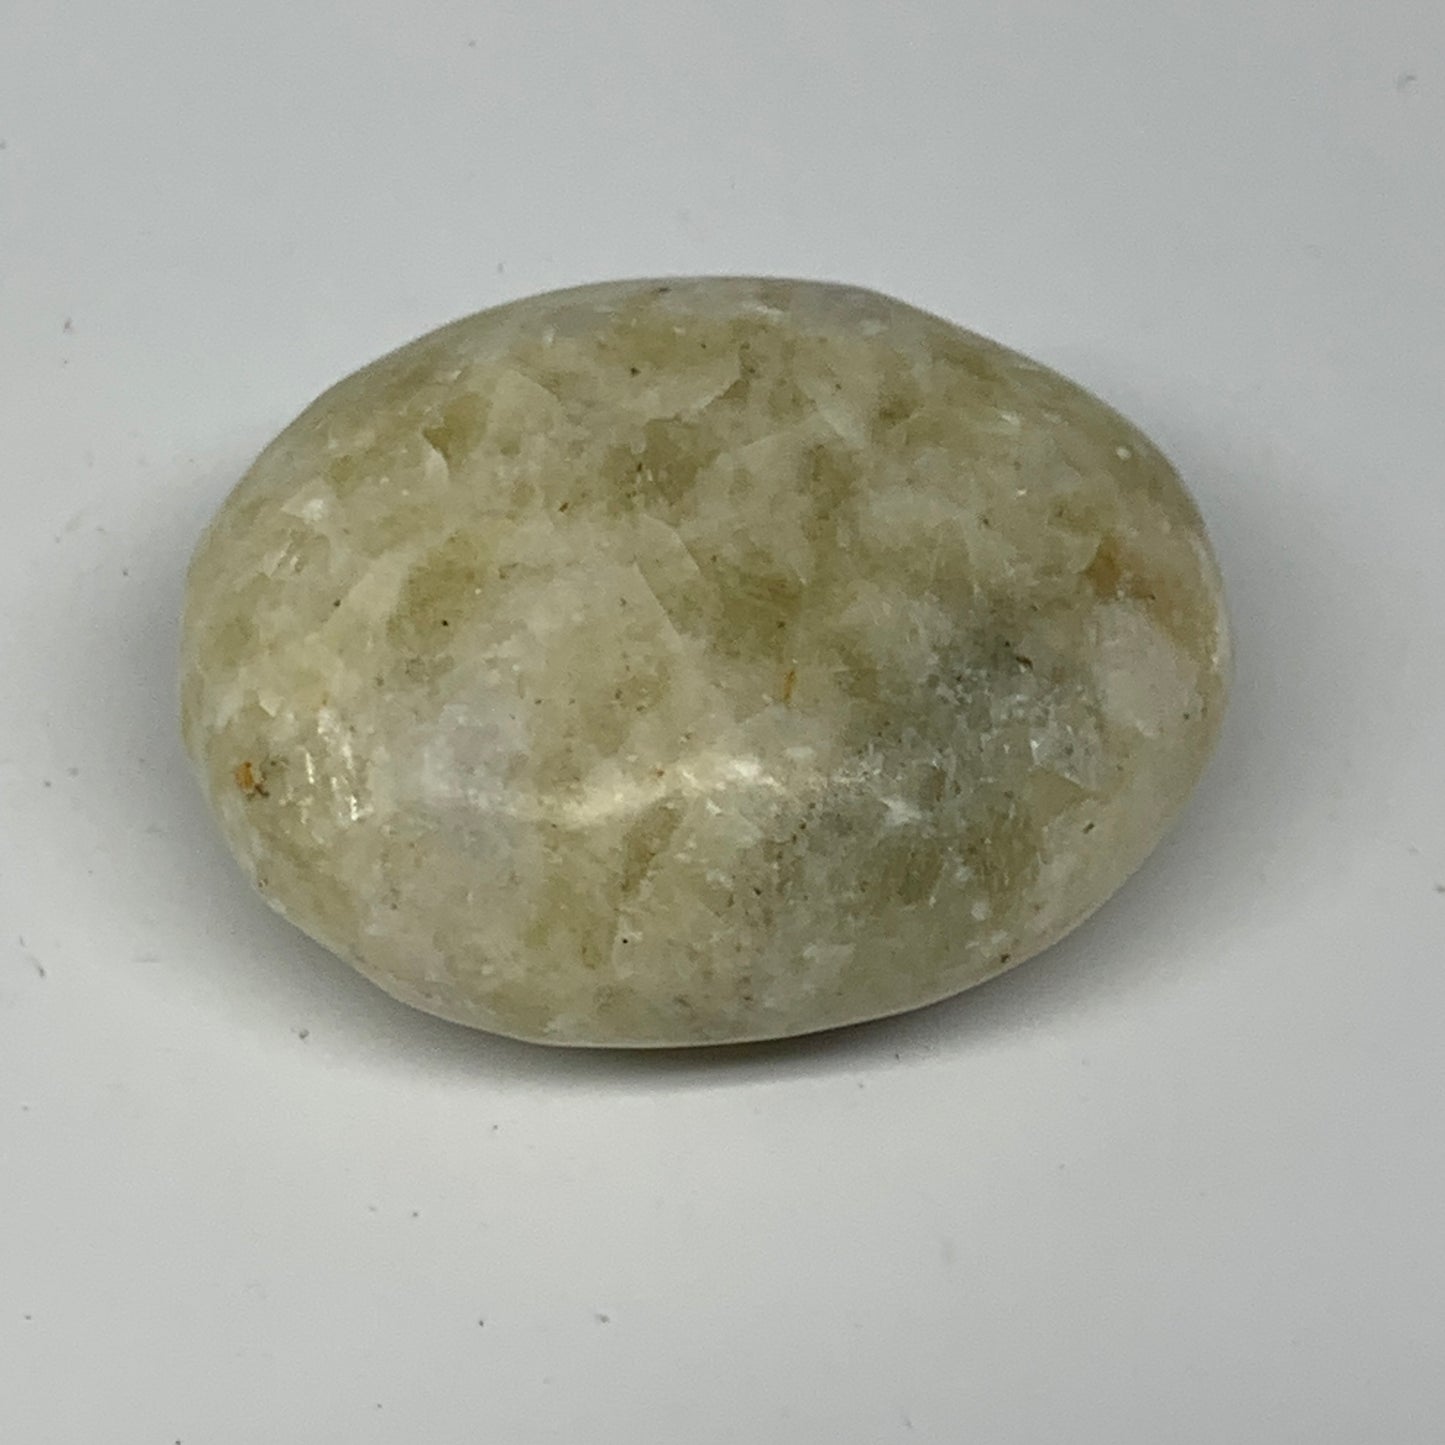 102.4g, 2.2"x1.8"x1.1", Natural Yellow Calcite Palm-Stone Crystal Polished Reiki